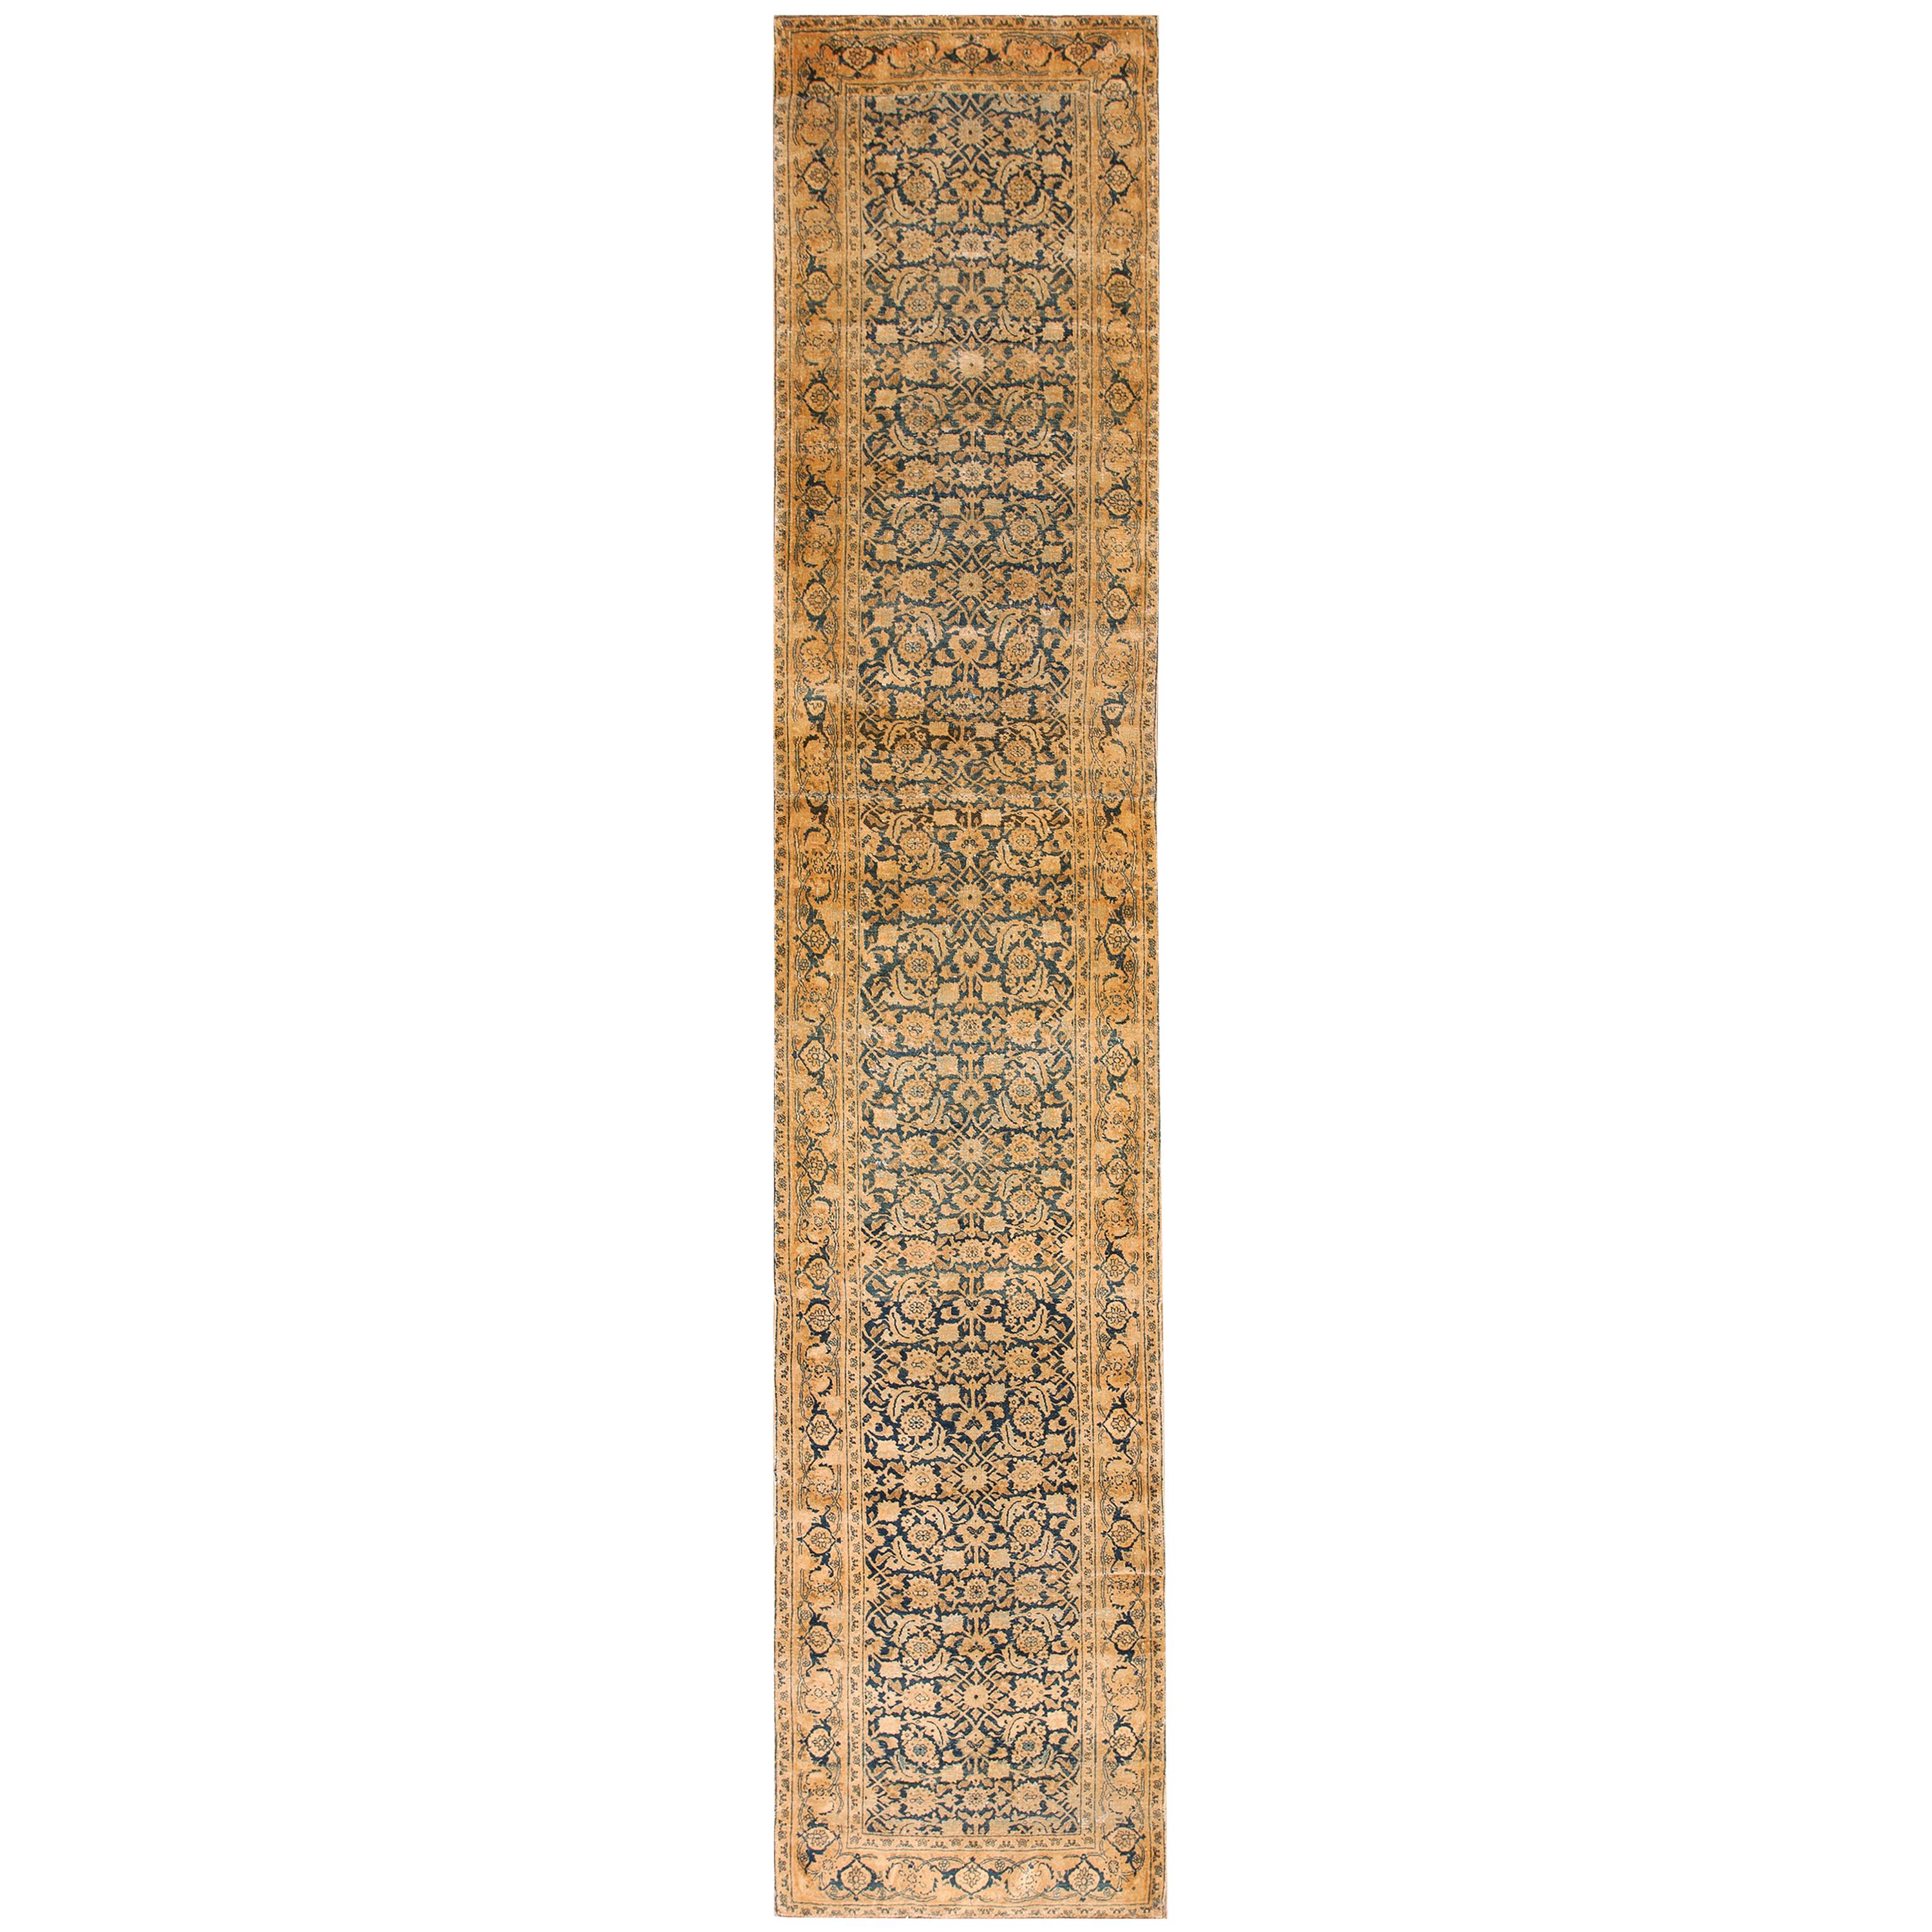 Early 20th Century Persian Tabriz Carpet ( 2'9" x 13'8" - 84 x 417 )